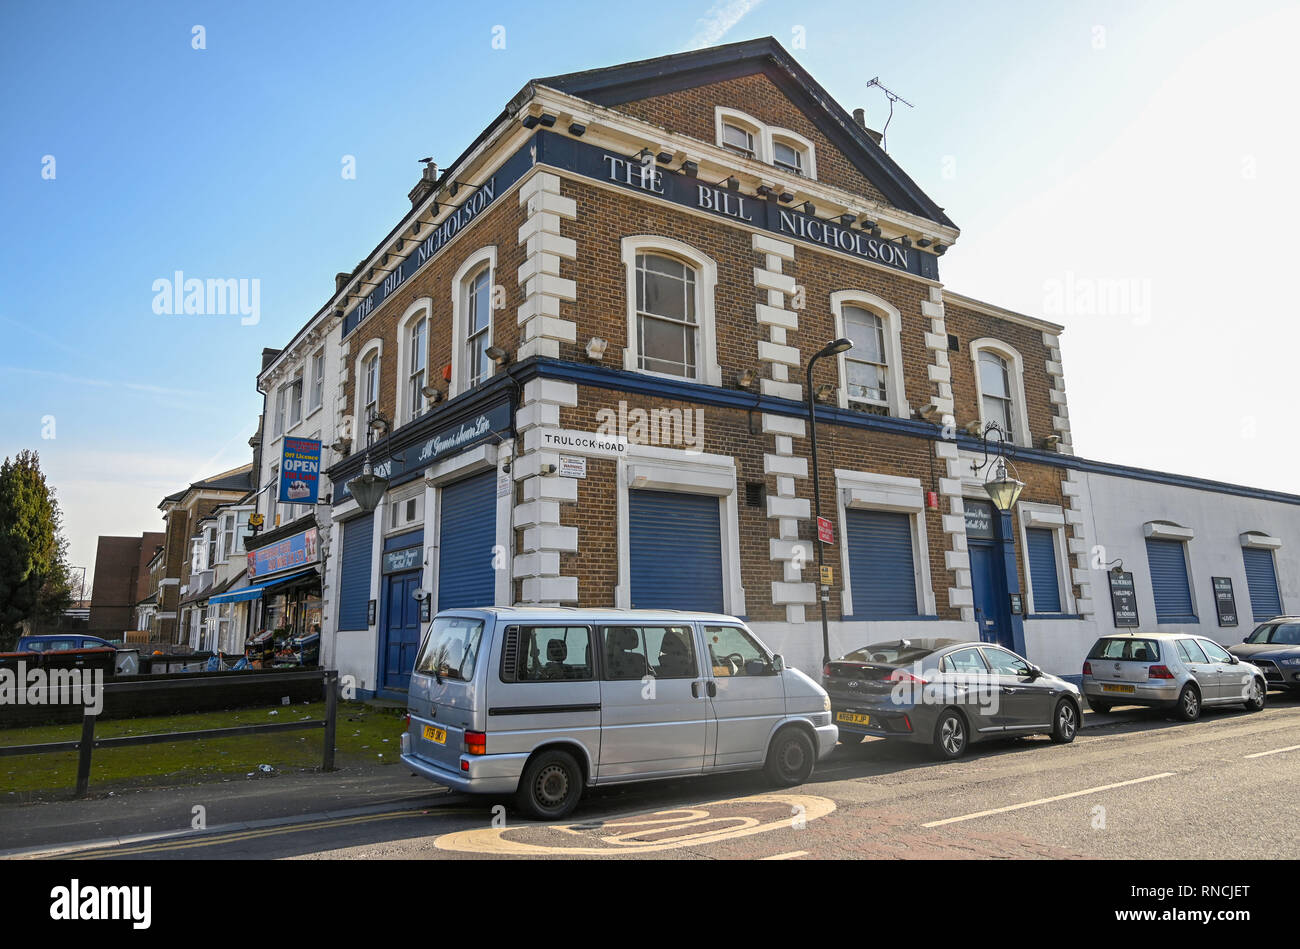 Tottenham, Londres, Reino Unido - El famoso Bill Nicholson pub para hinchas de fútbol impulsa Foto de stock